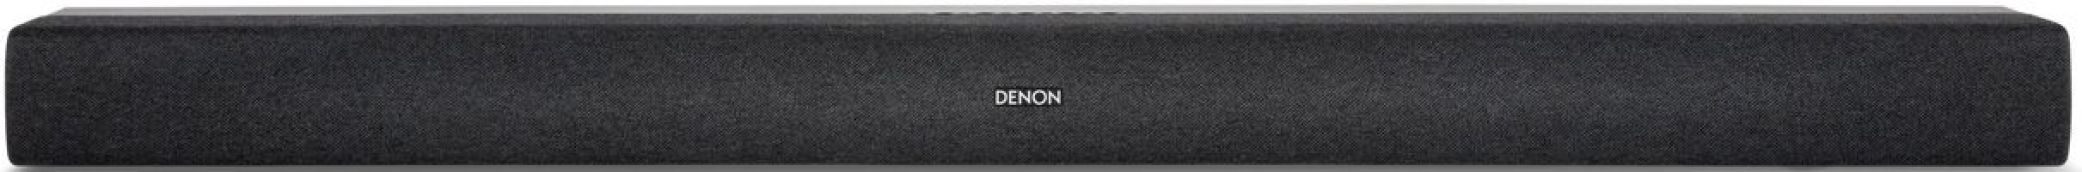 denon-dht-s218-image